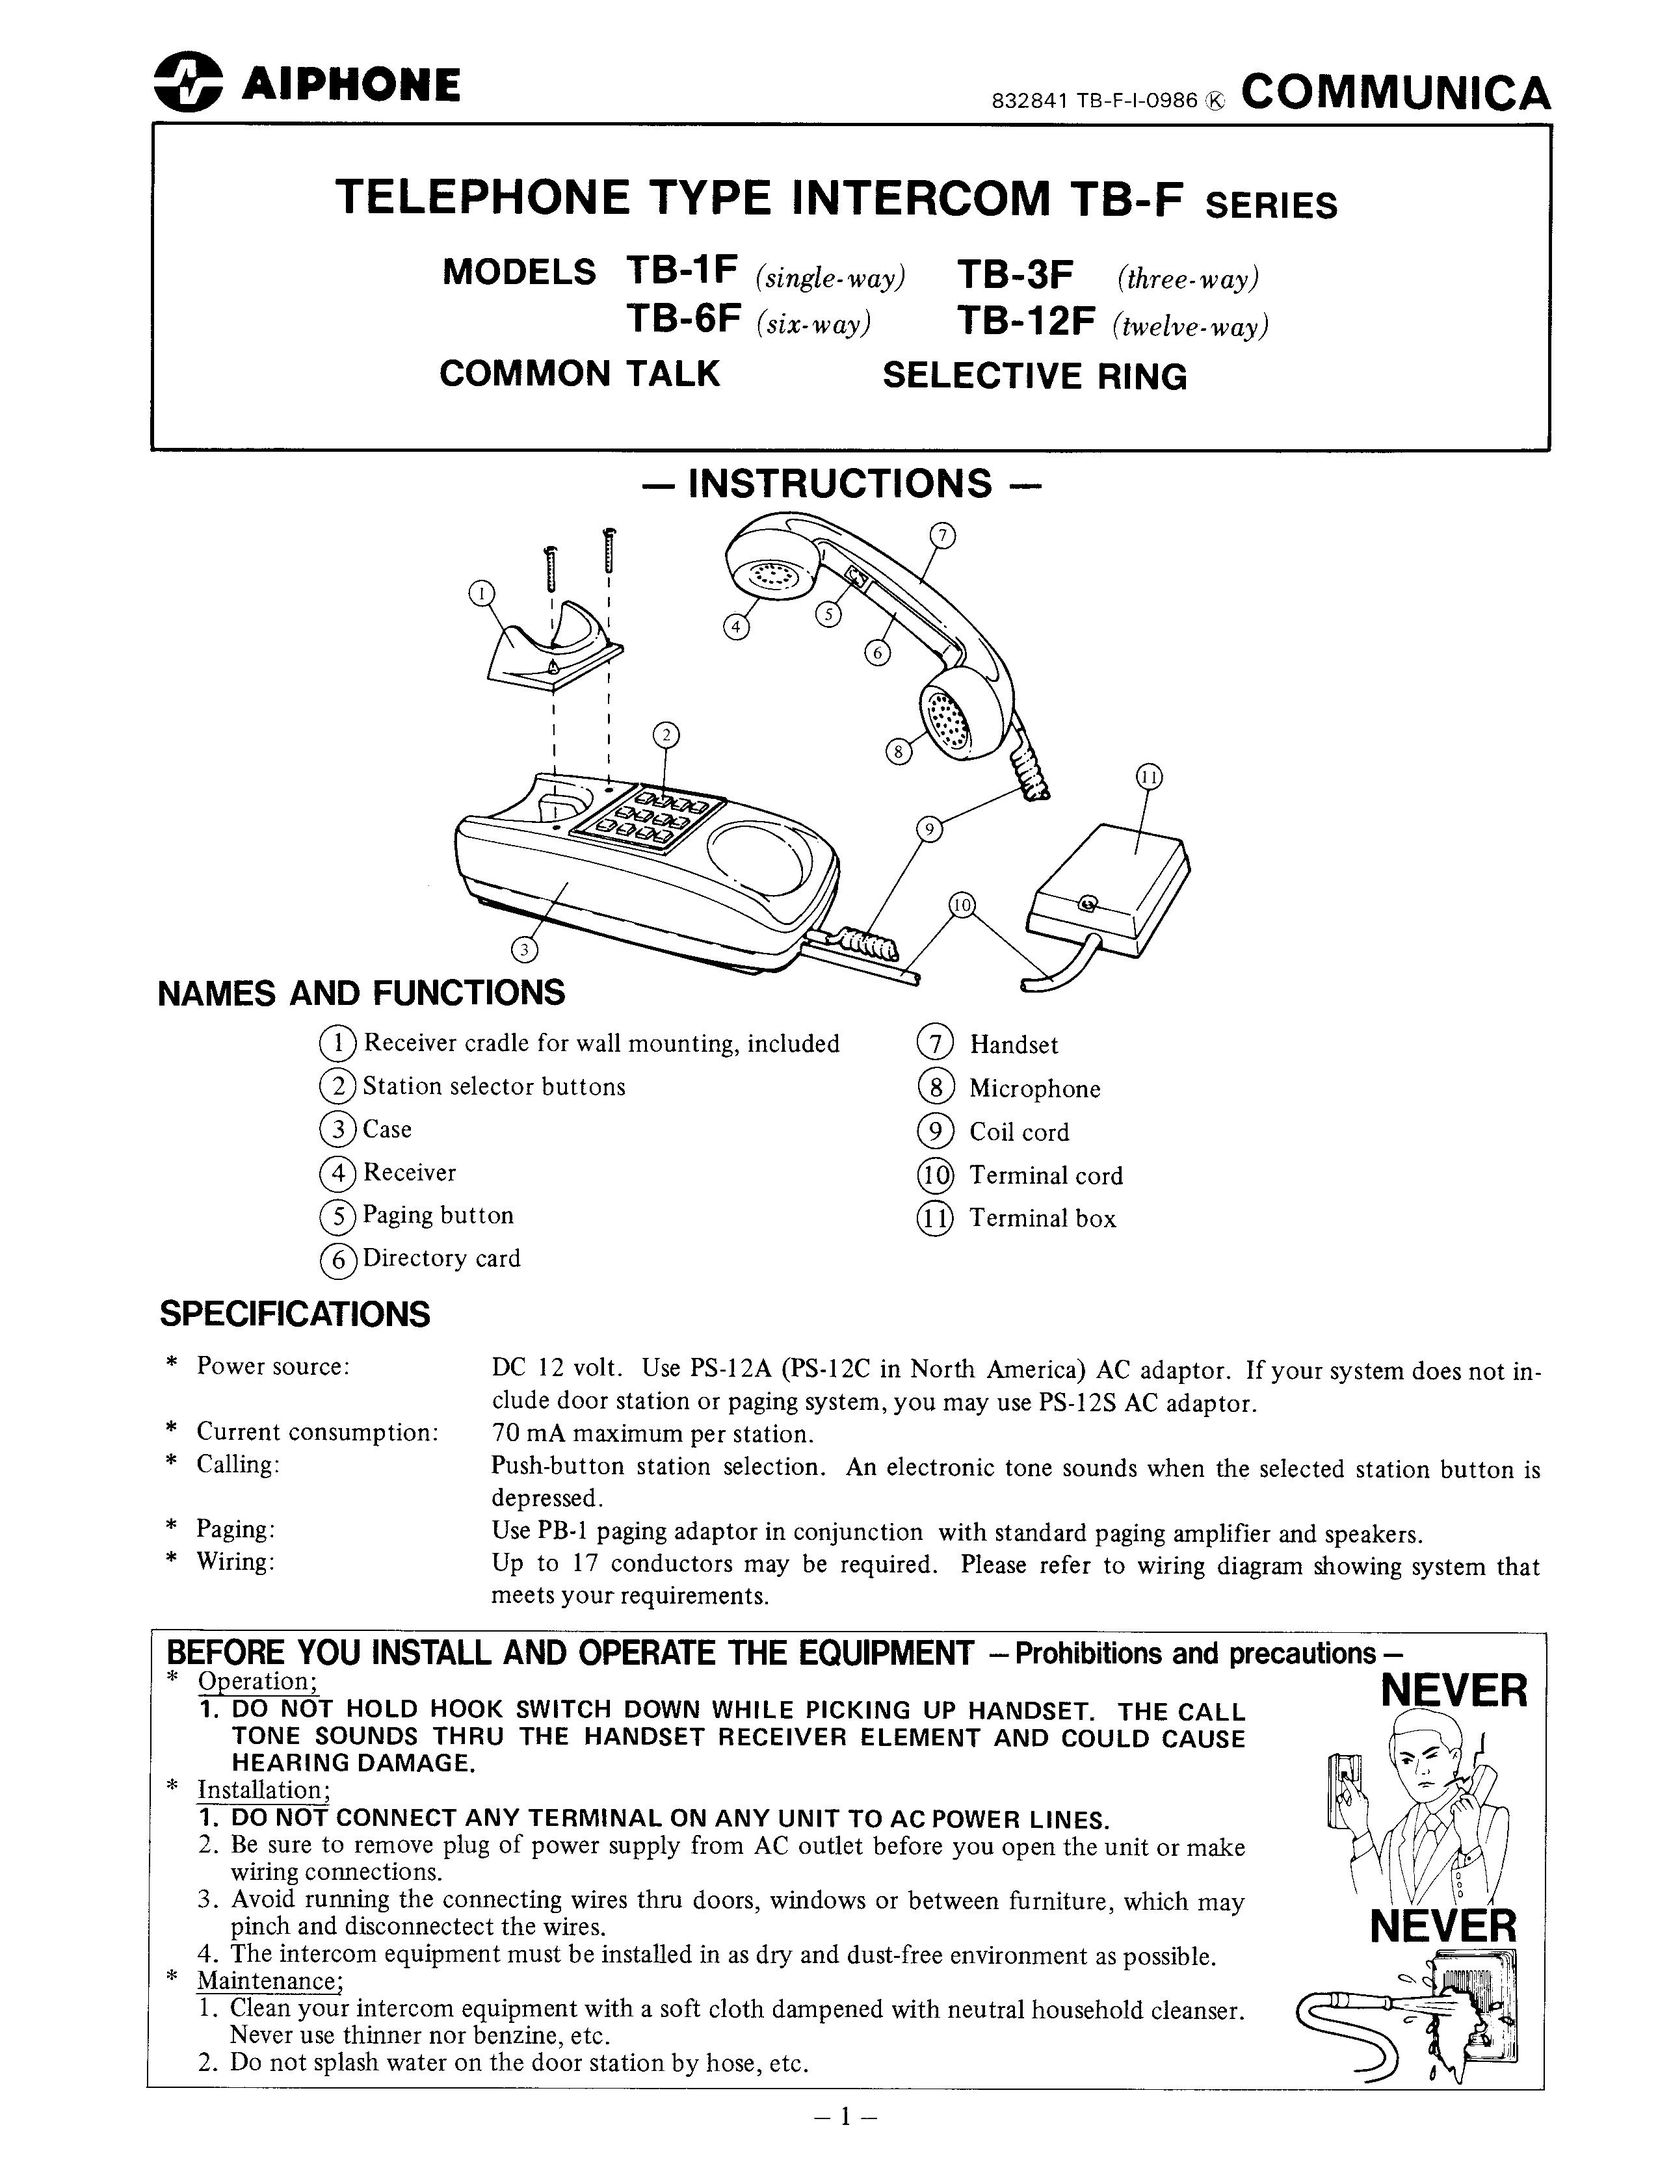 Aiphone TB-6F Telephone User Manual